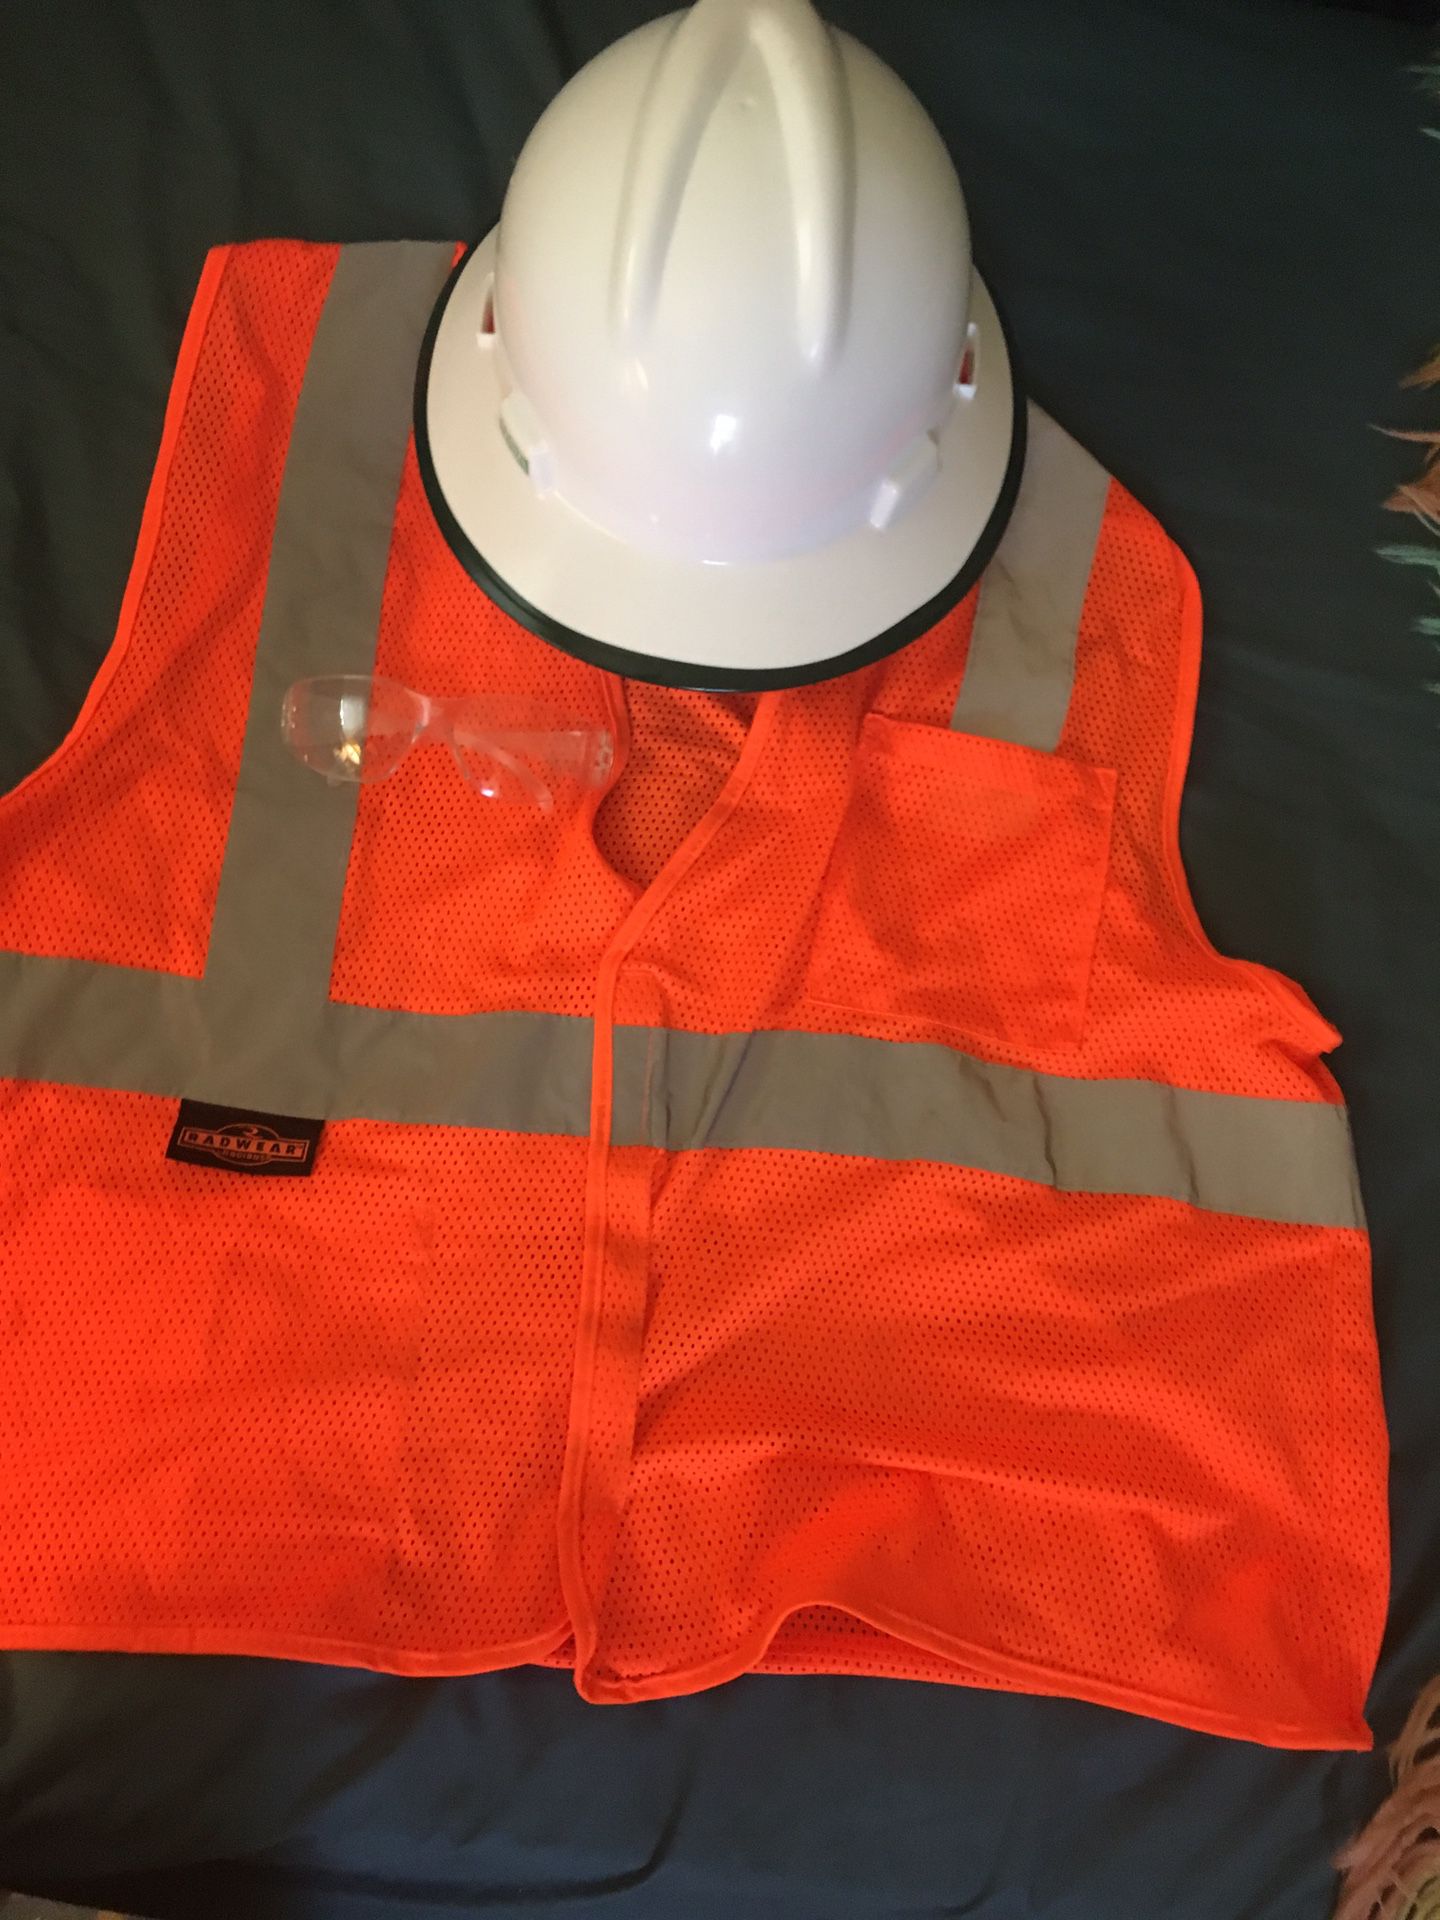 Safety helmet, reflective vest and safety glasses